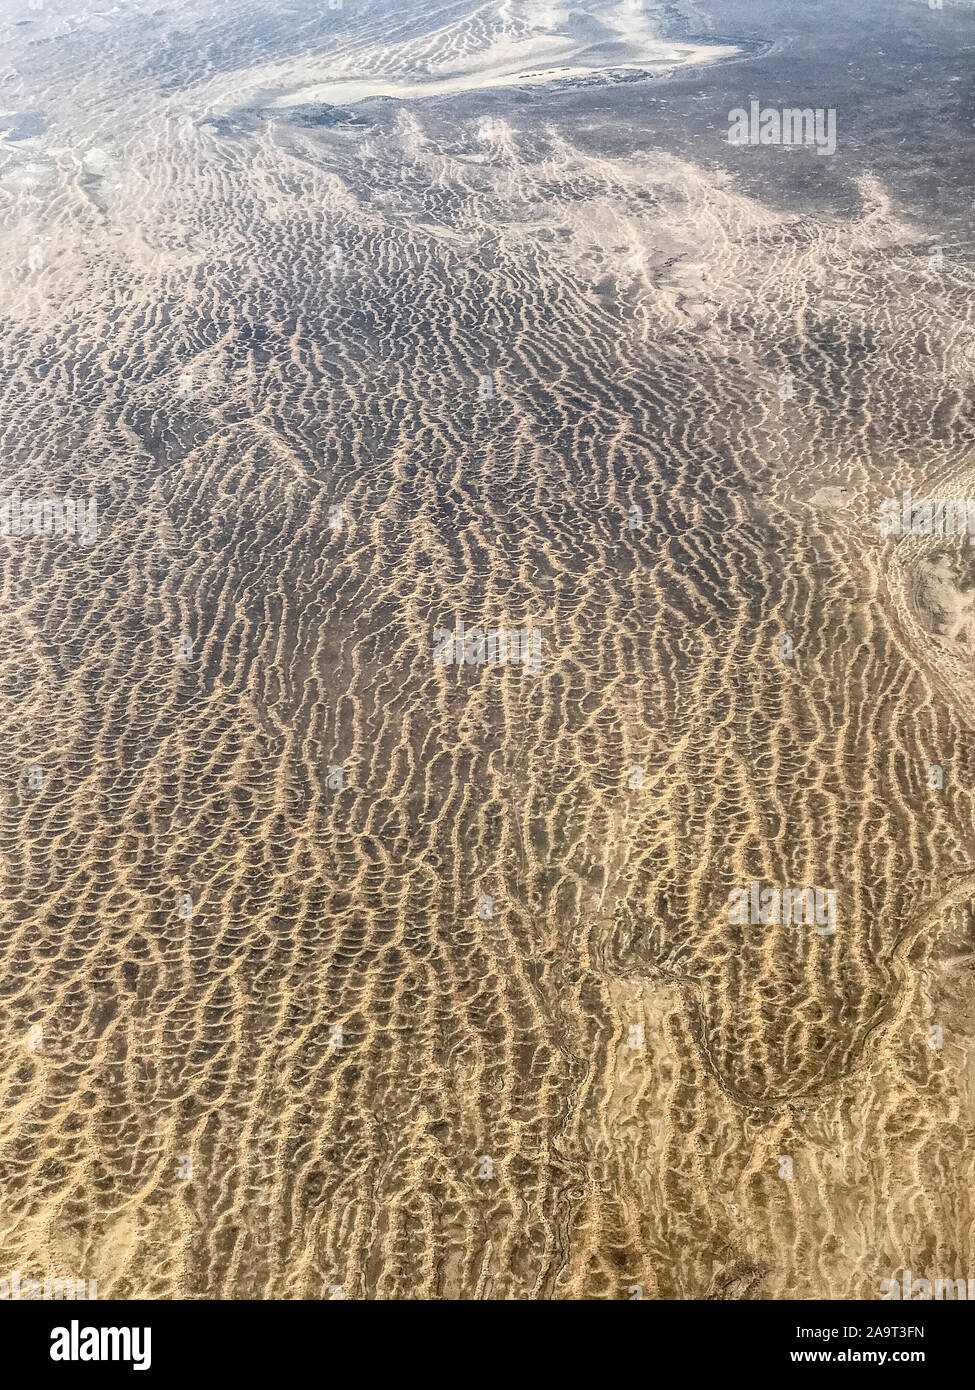 Vista aérea de dunas de arena, Turkmenistán, el desierto de Karakum, Asia Foto de stock